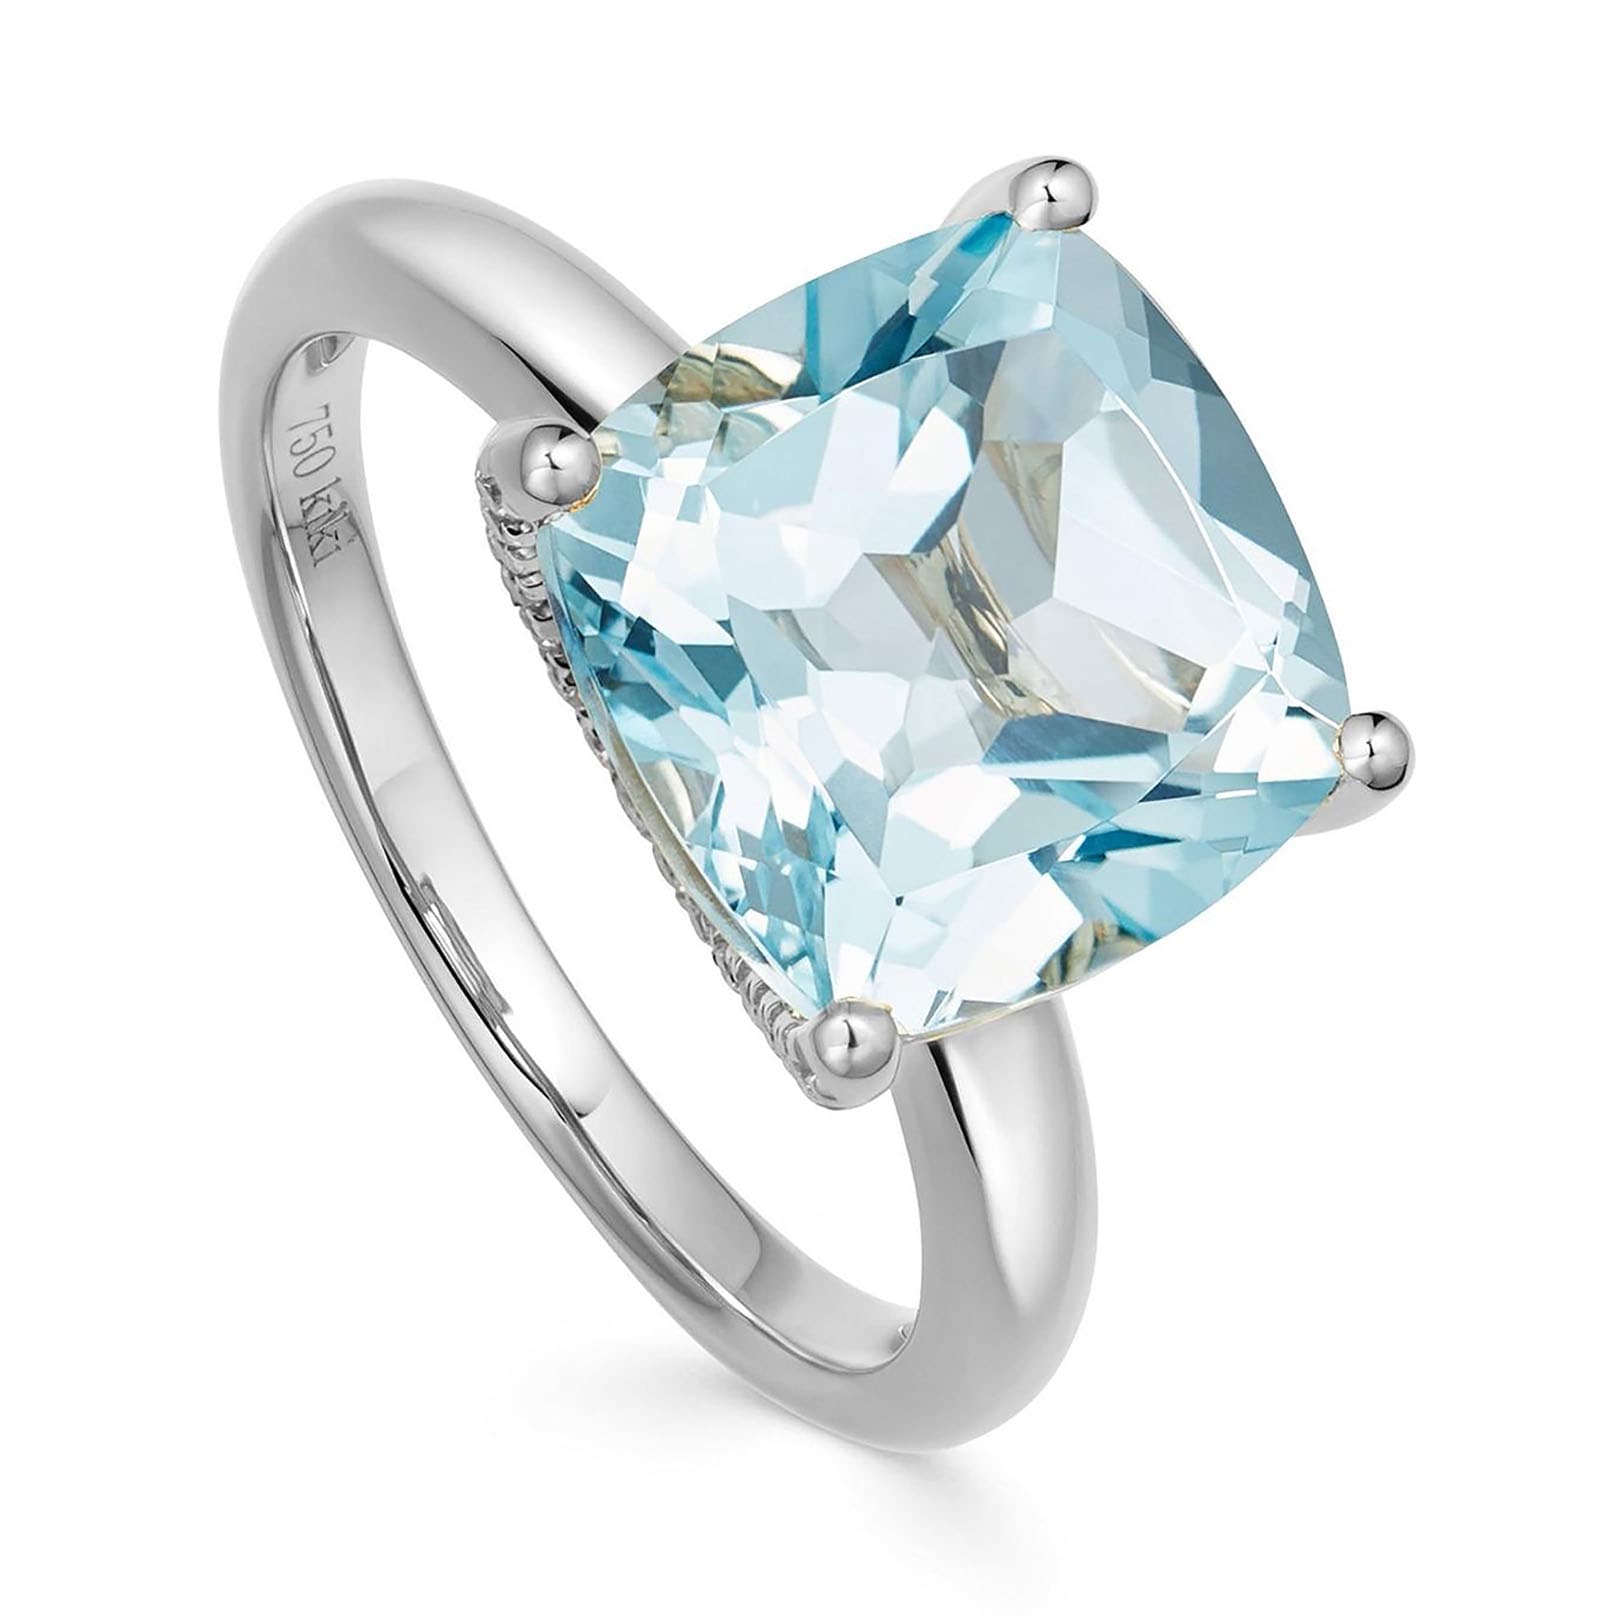 Kiki Cushion 18ct White Gold, Diamond Claw & Blue Topaz Ring - Ring Size K